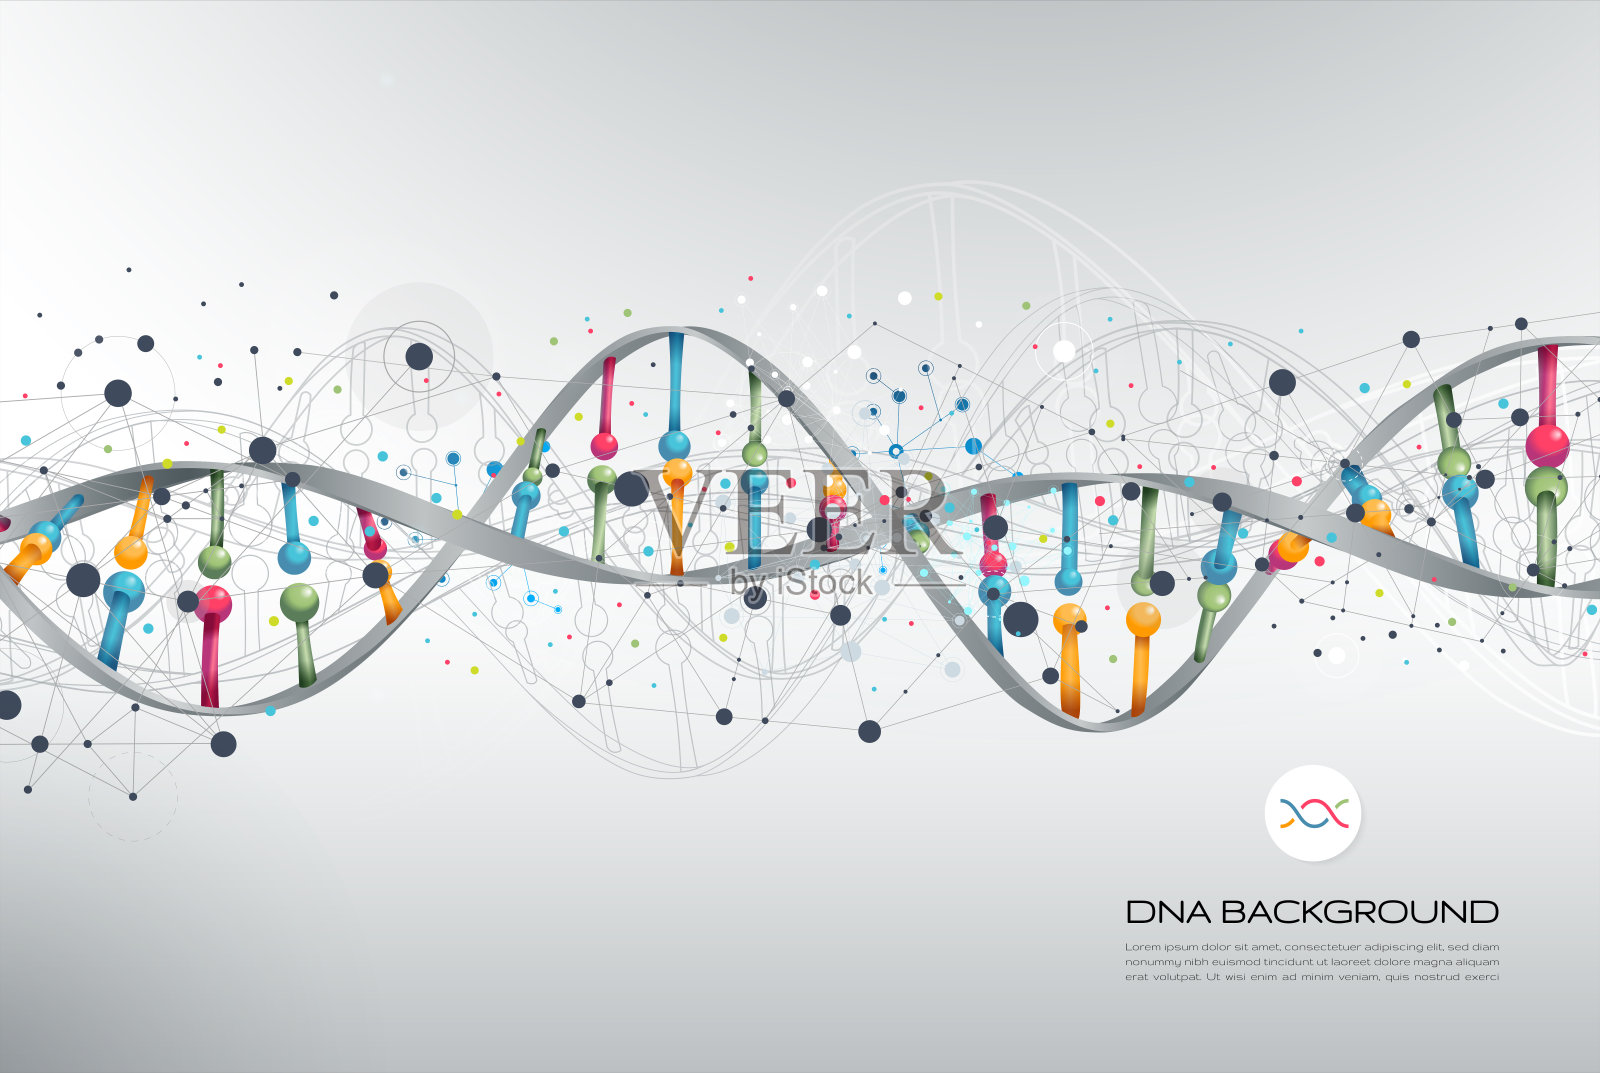 DNA抽象背景插画图片素材